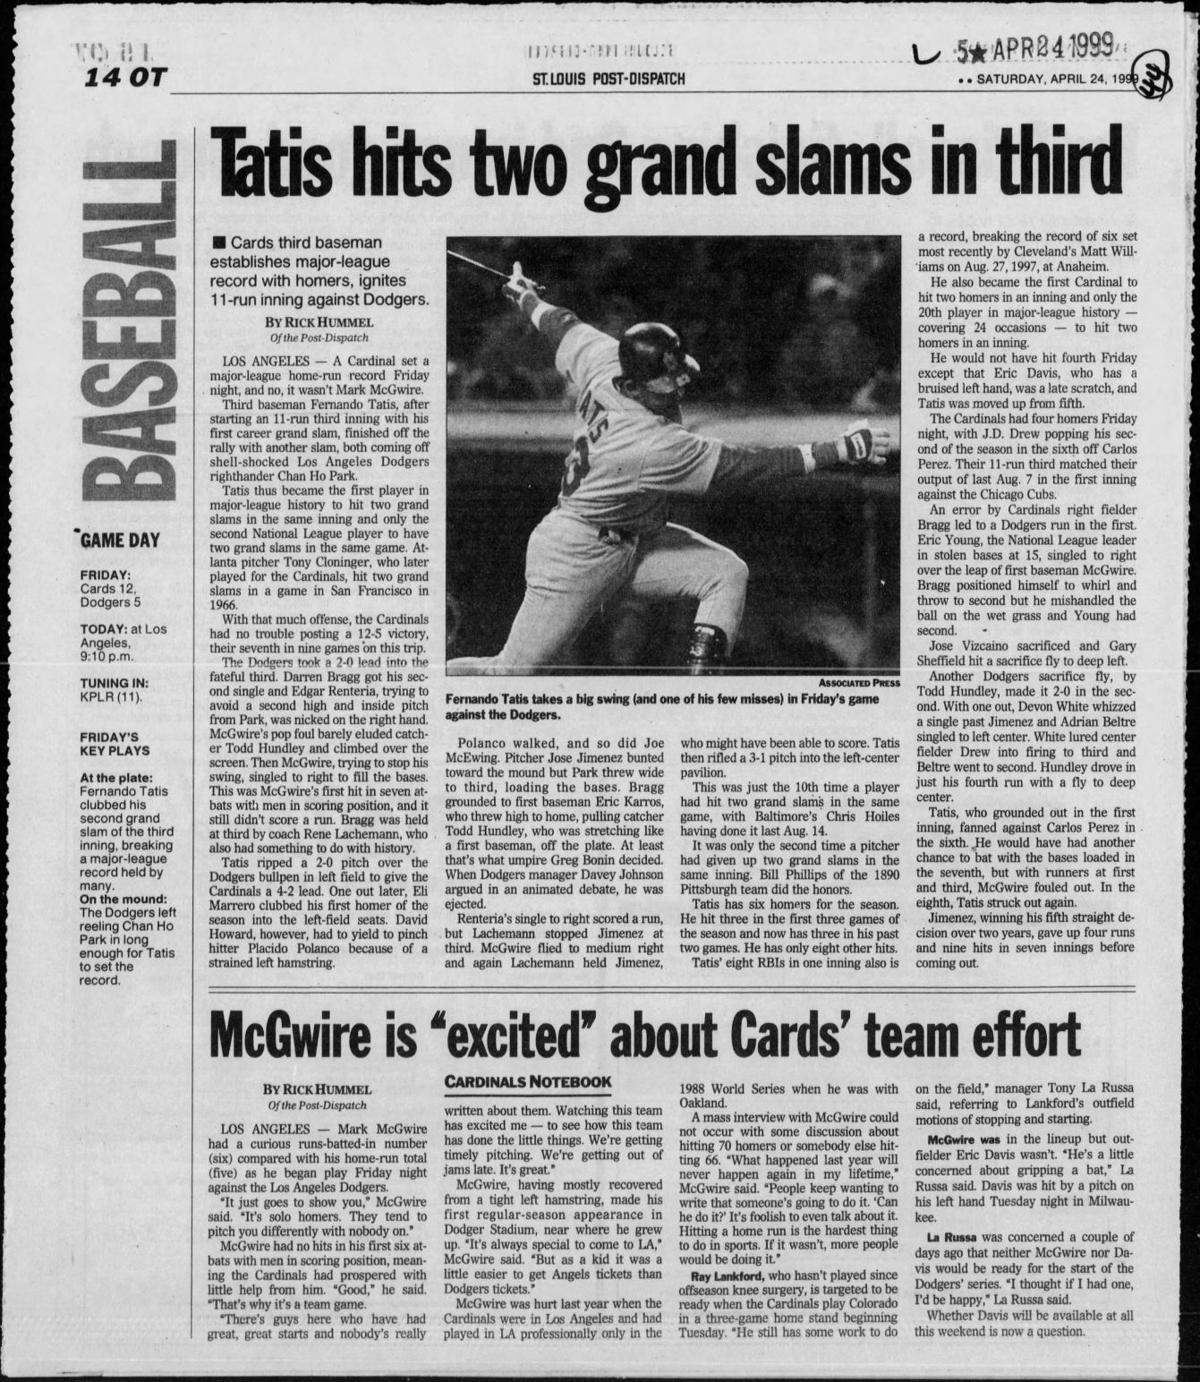 July 30, 1969: Astros' Menke, Wynn hit grand slams in same inning